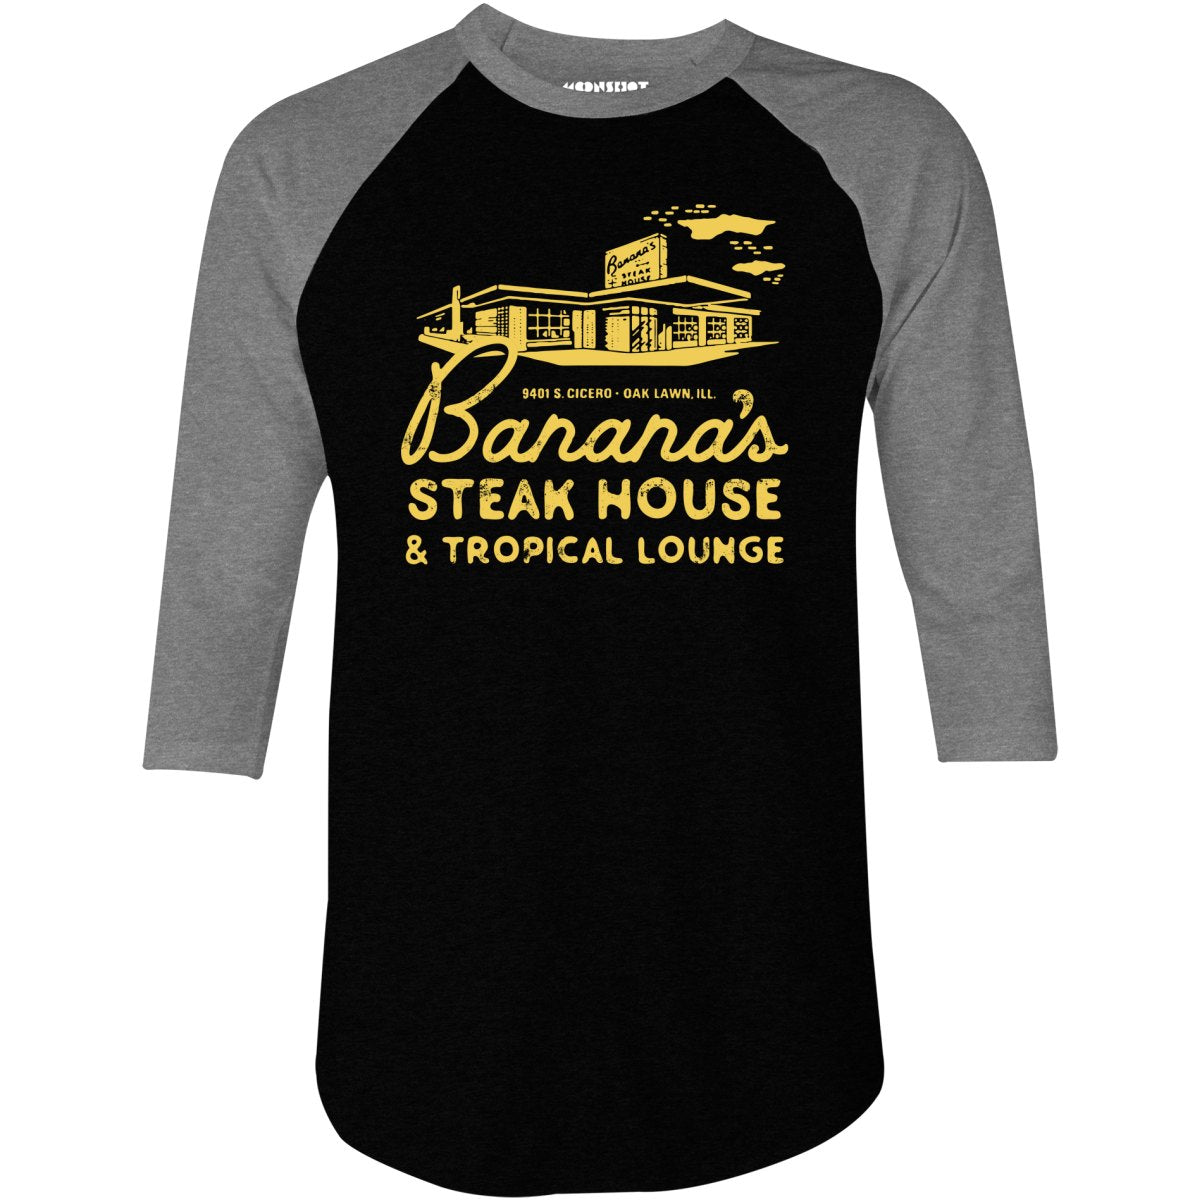 Banana's Steak House - Oak Lawn, Il - Vintage Restaurant - 3/4 Sleeve Raglan T-Shirt